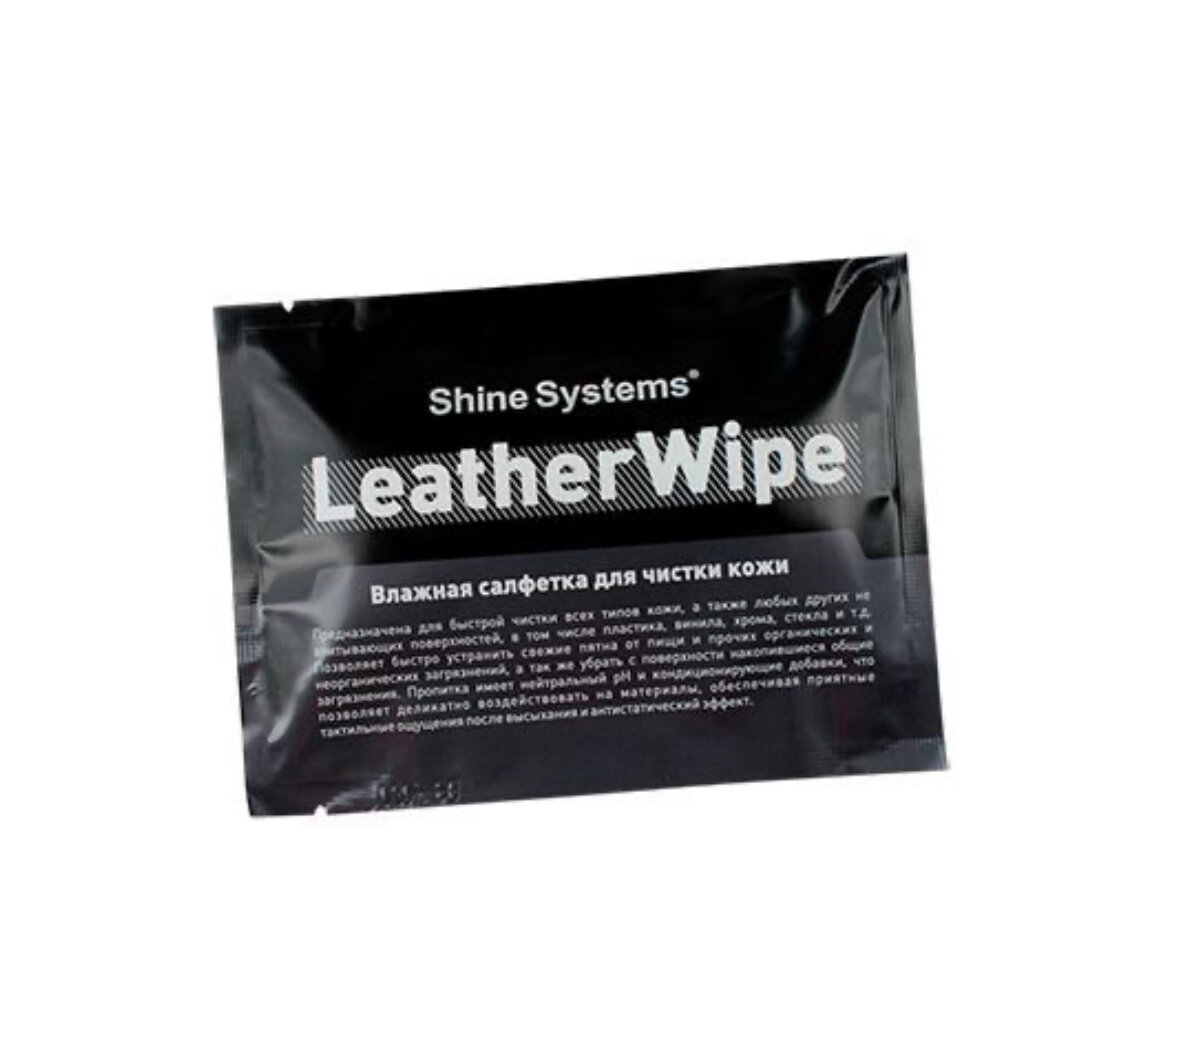 Shine Systems LeatherWipe - влажная салфетка для чистки кожи, 1 шт - фотография № 2